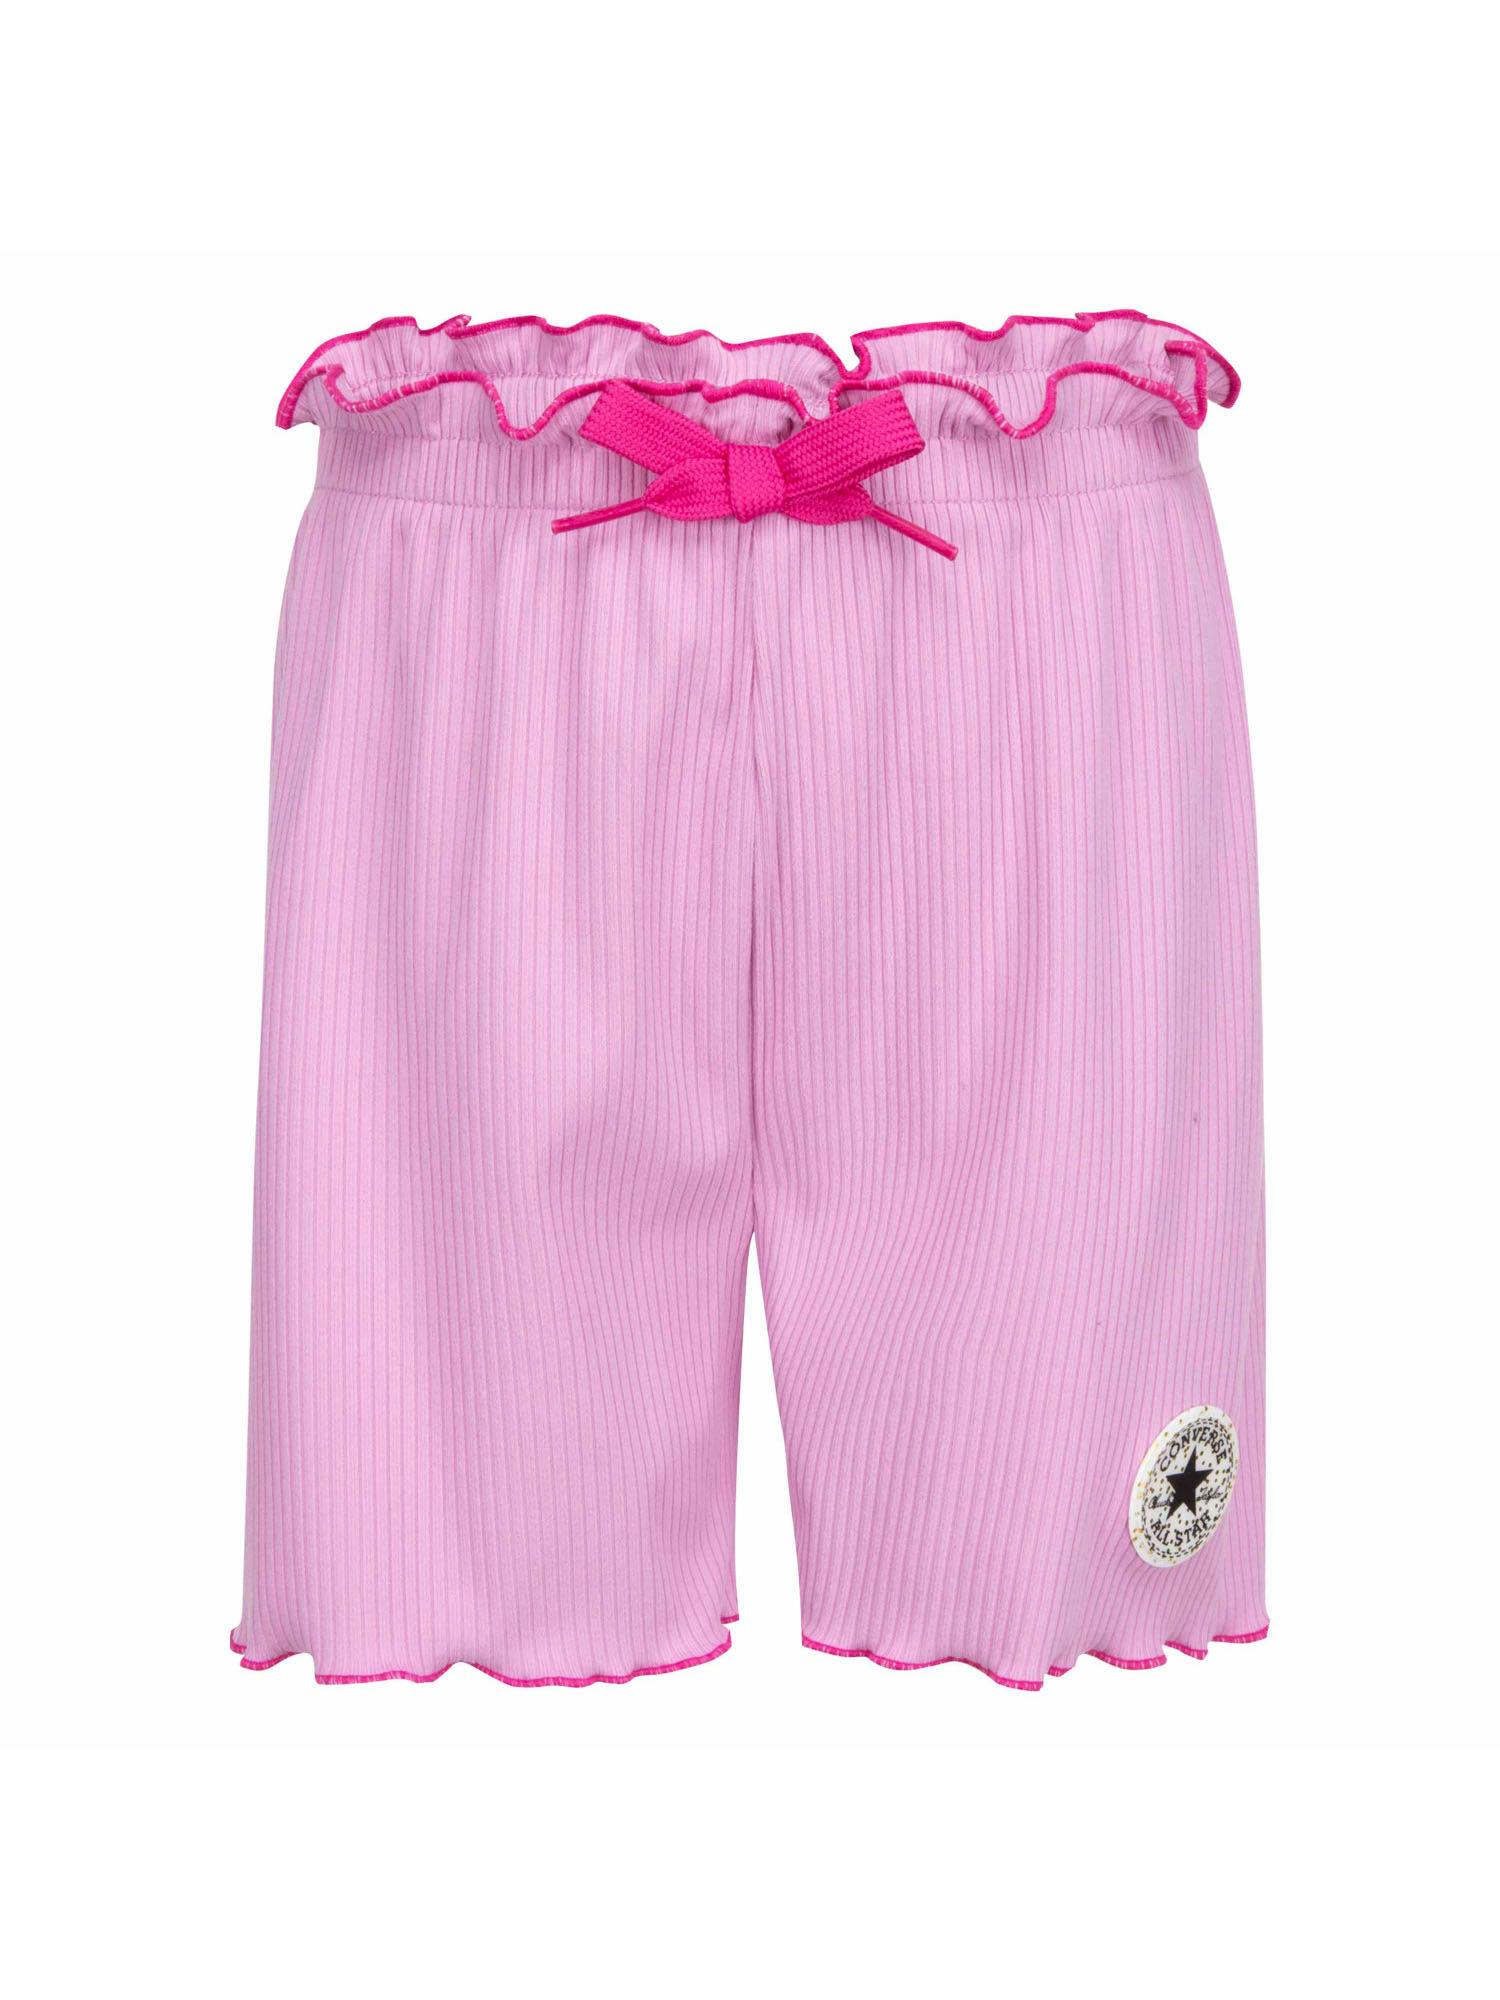 girls pink stripes shorts